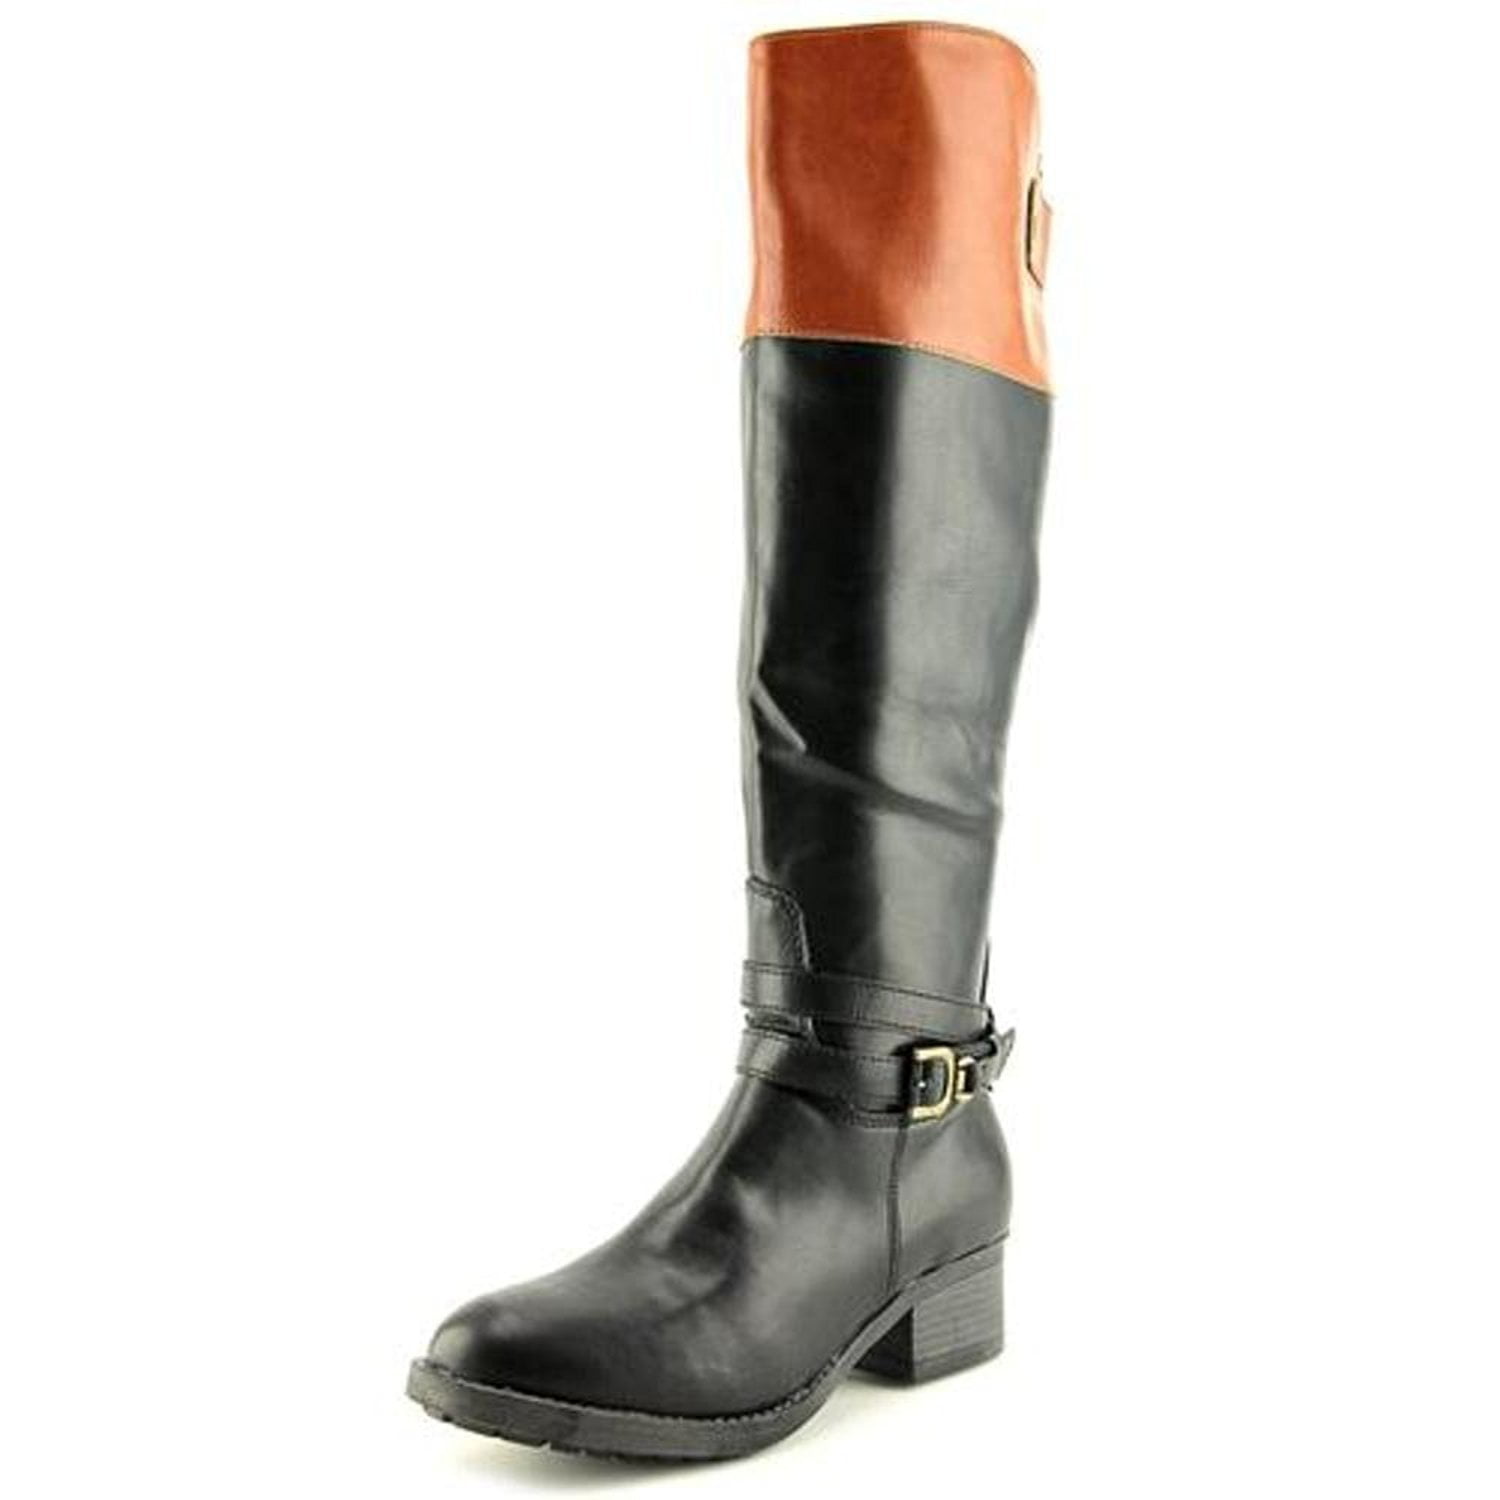 Rampage Women's Imelda Knee High Riding Boots (6 B(M) US, Black/Cognac ...